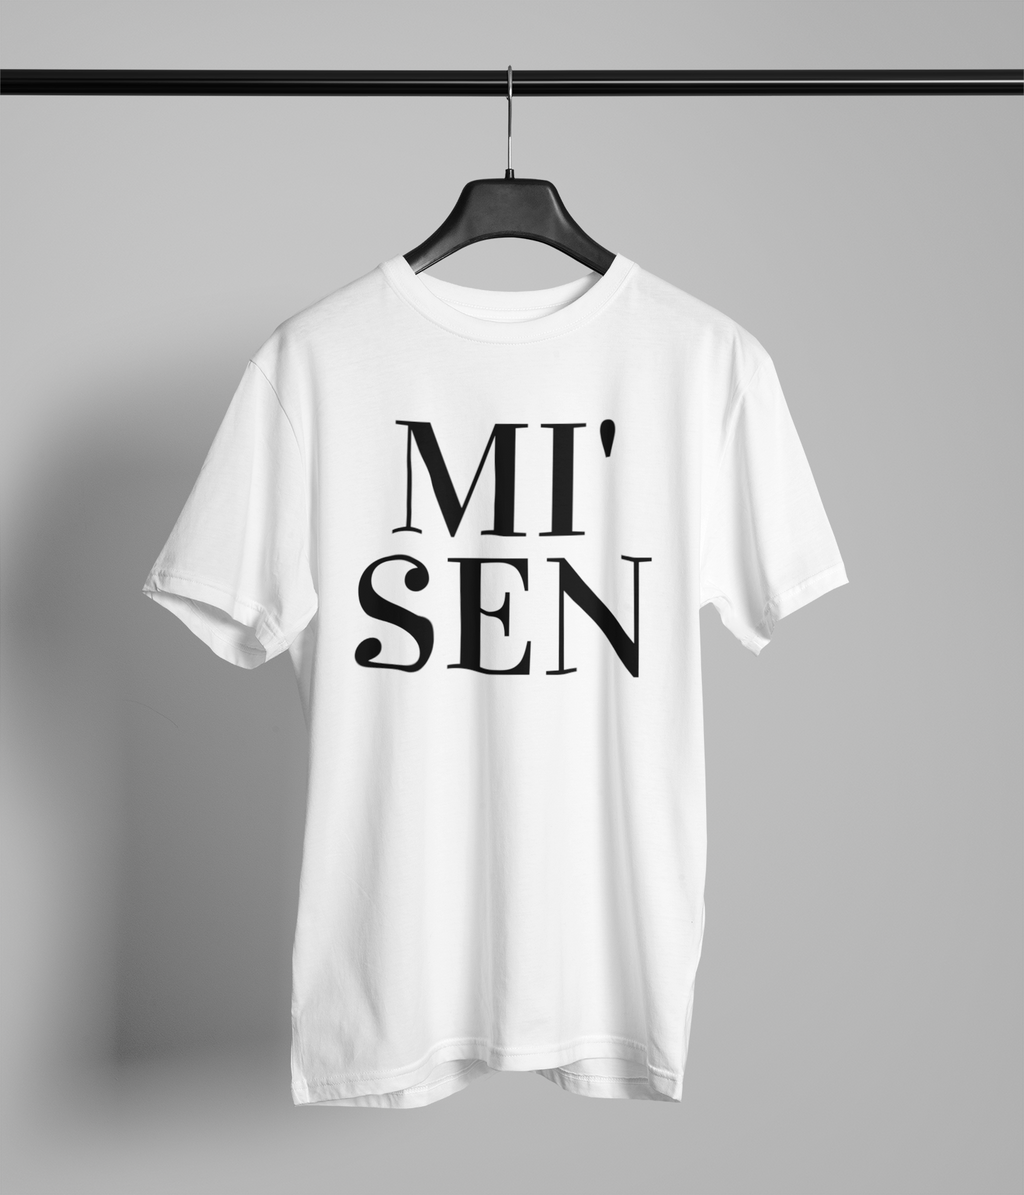 MI'SEN Northern Slang T-Shirt Unisex